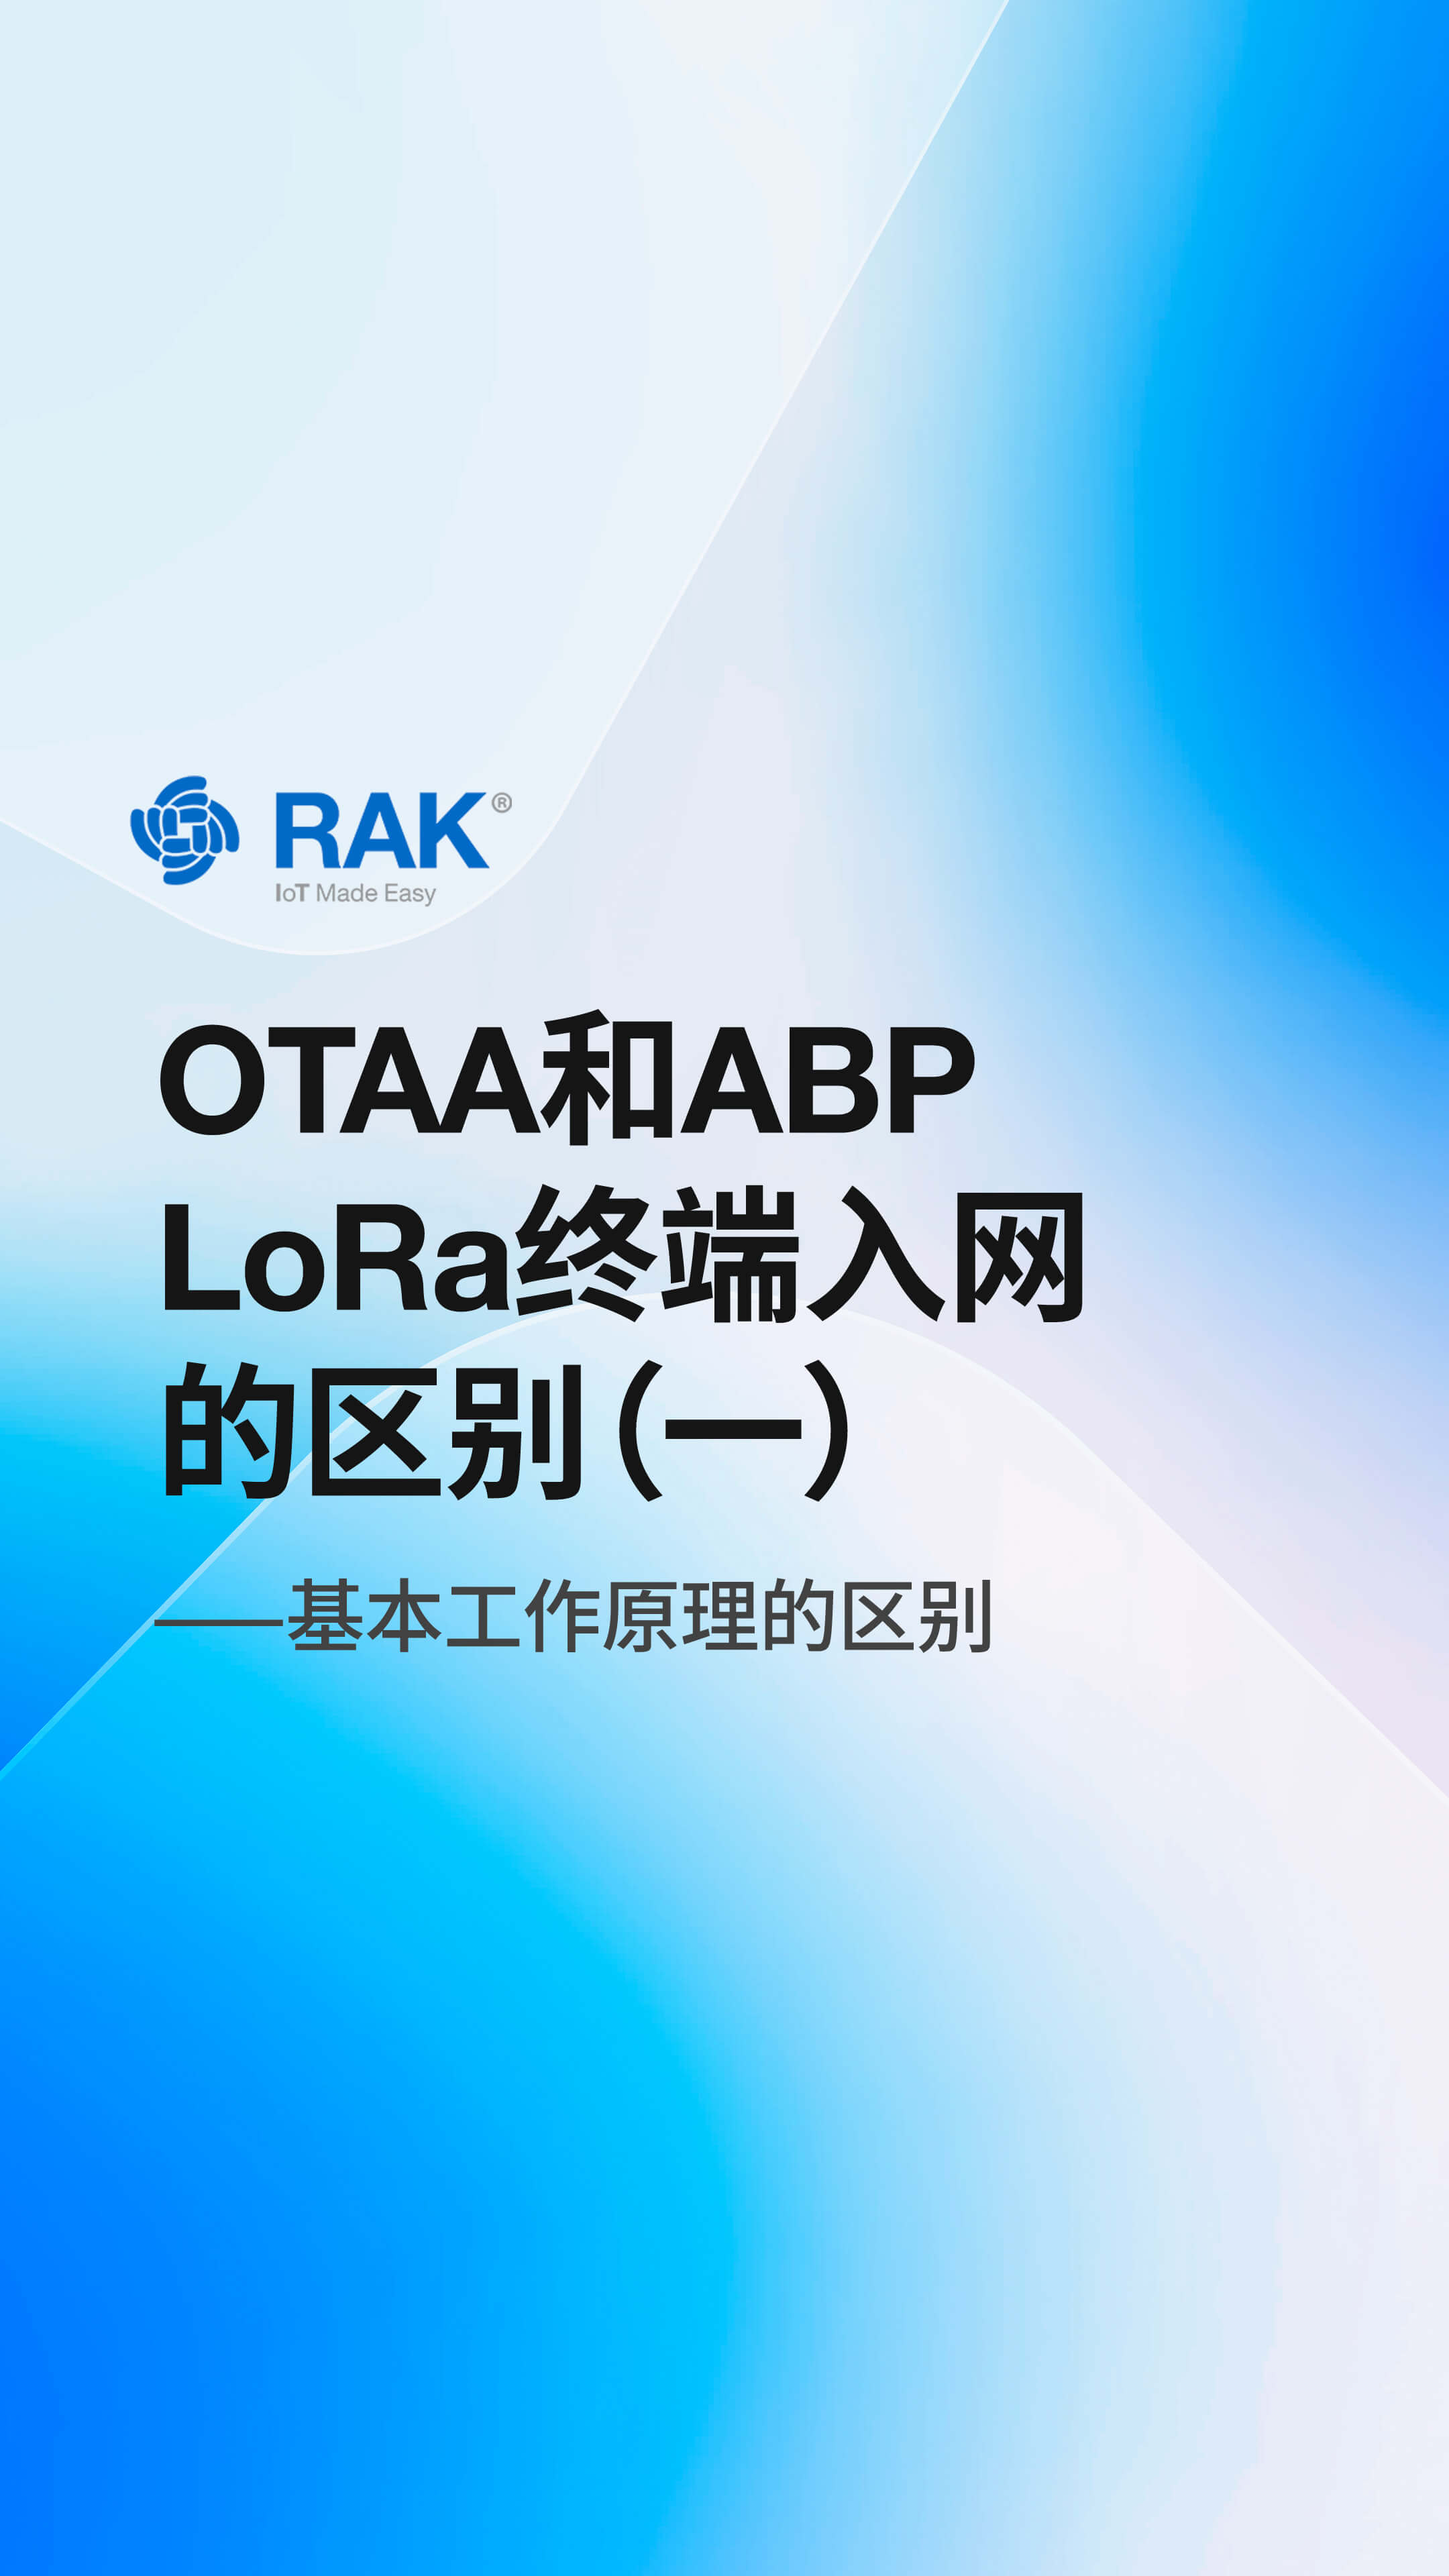 LoRa终端入网方式OTAA与ABP的区别：原理篇
#LoRa终端 #入网方式 #LoRa故事汇 #瑞科慧联 